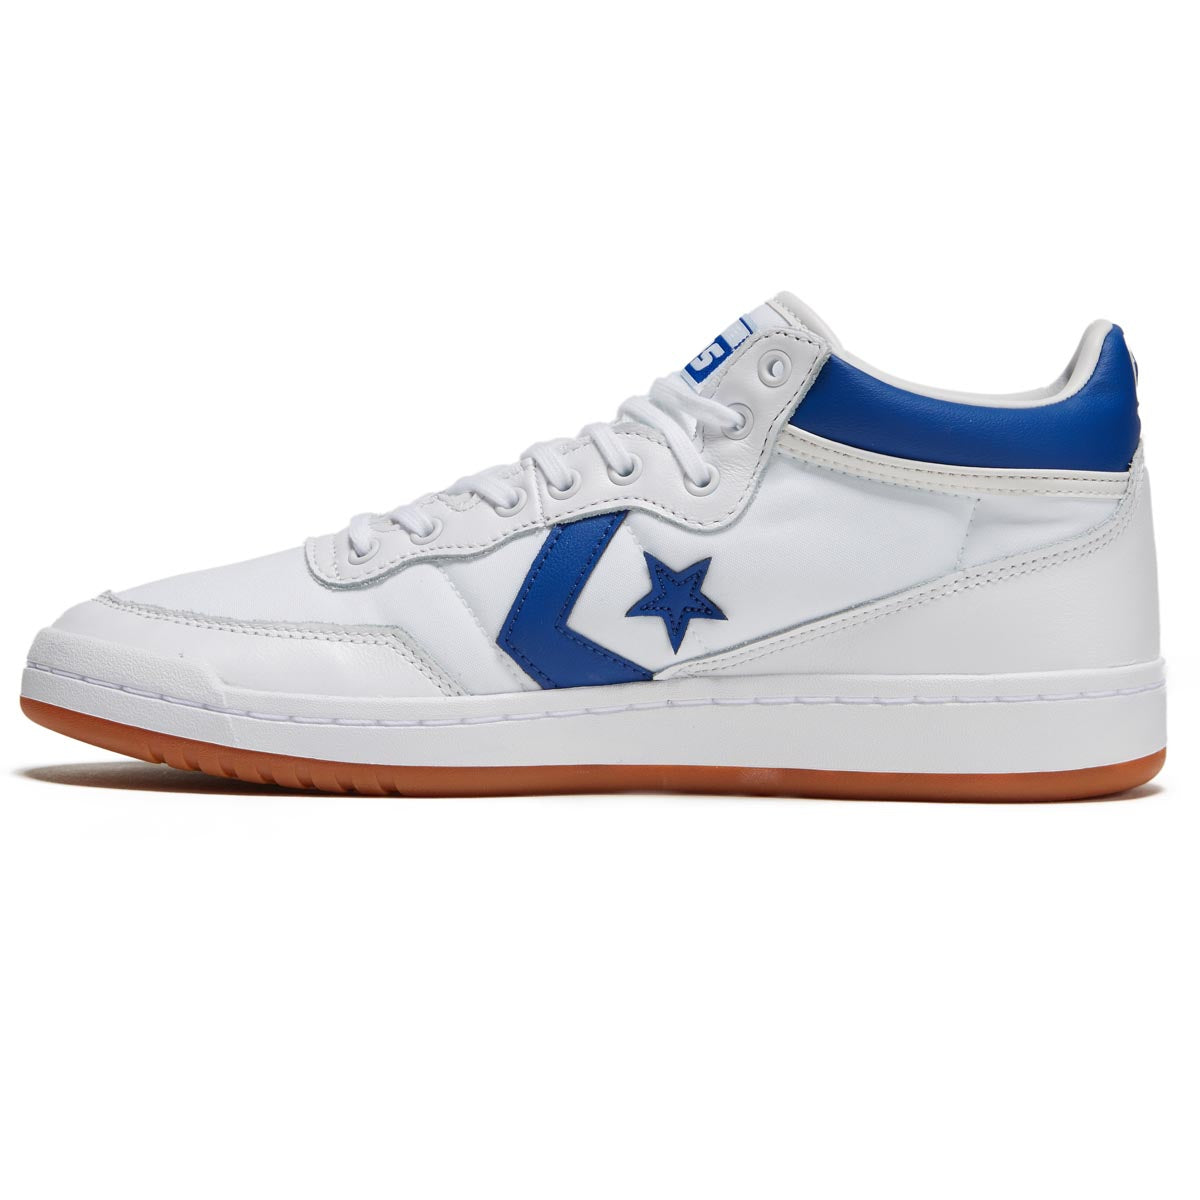 Converse Fastbreak Pro Leather Mid Shoes - White/Blue/White image 2